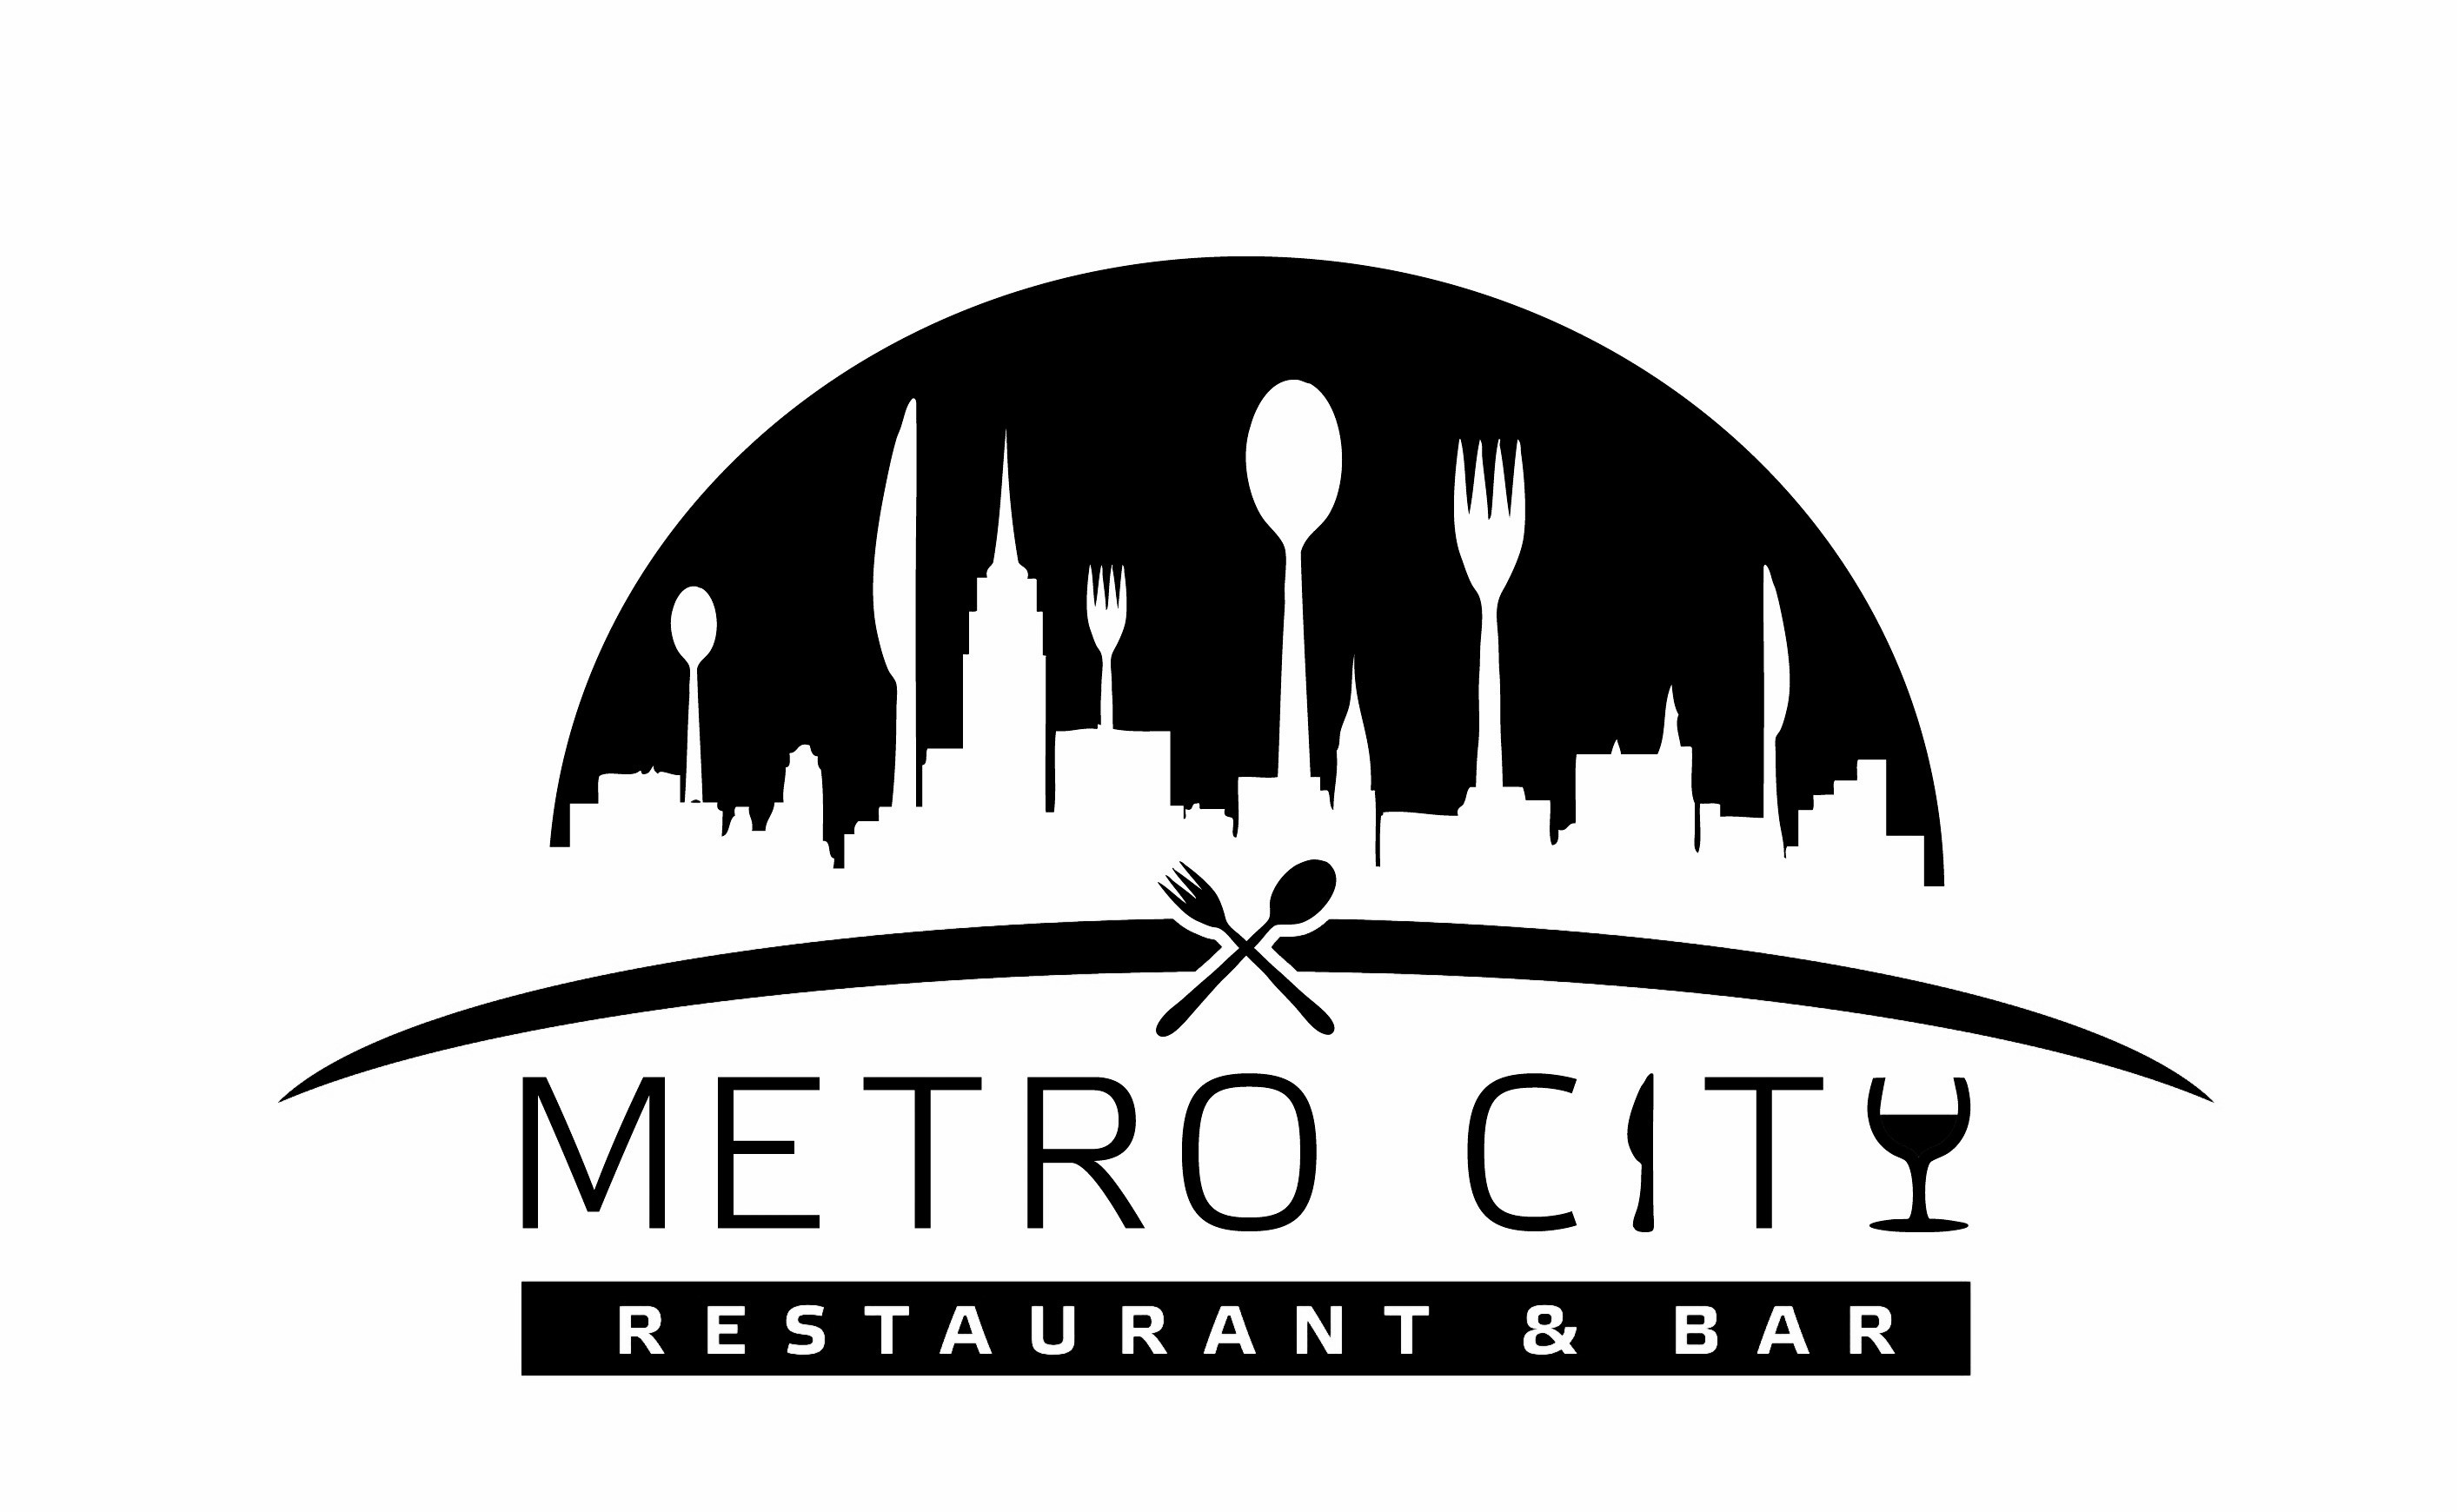 Metro City Restaurant - East Duane